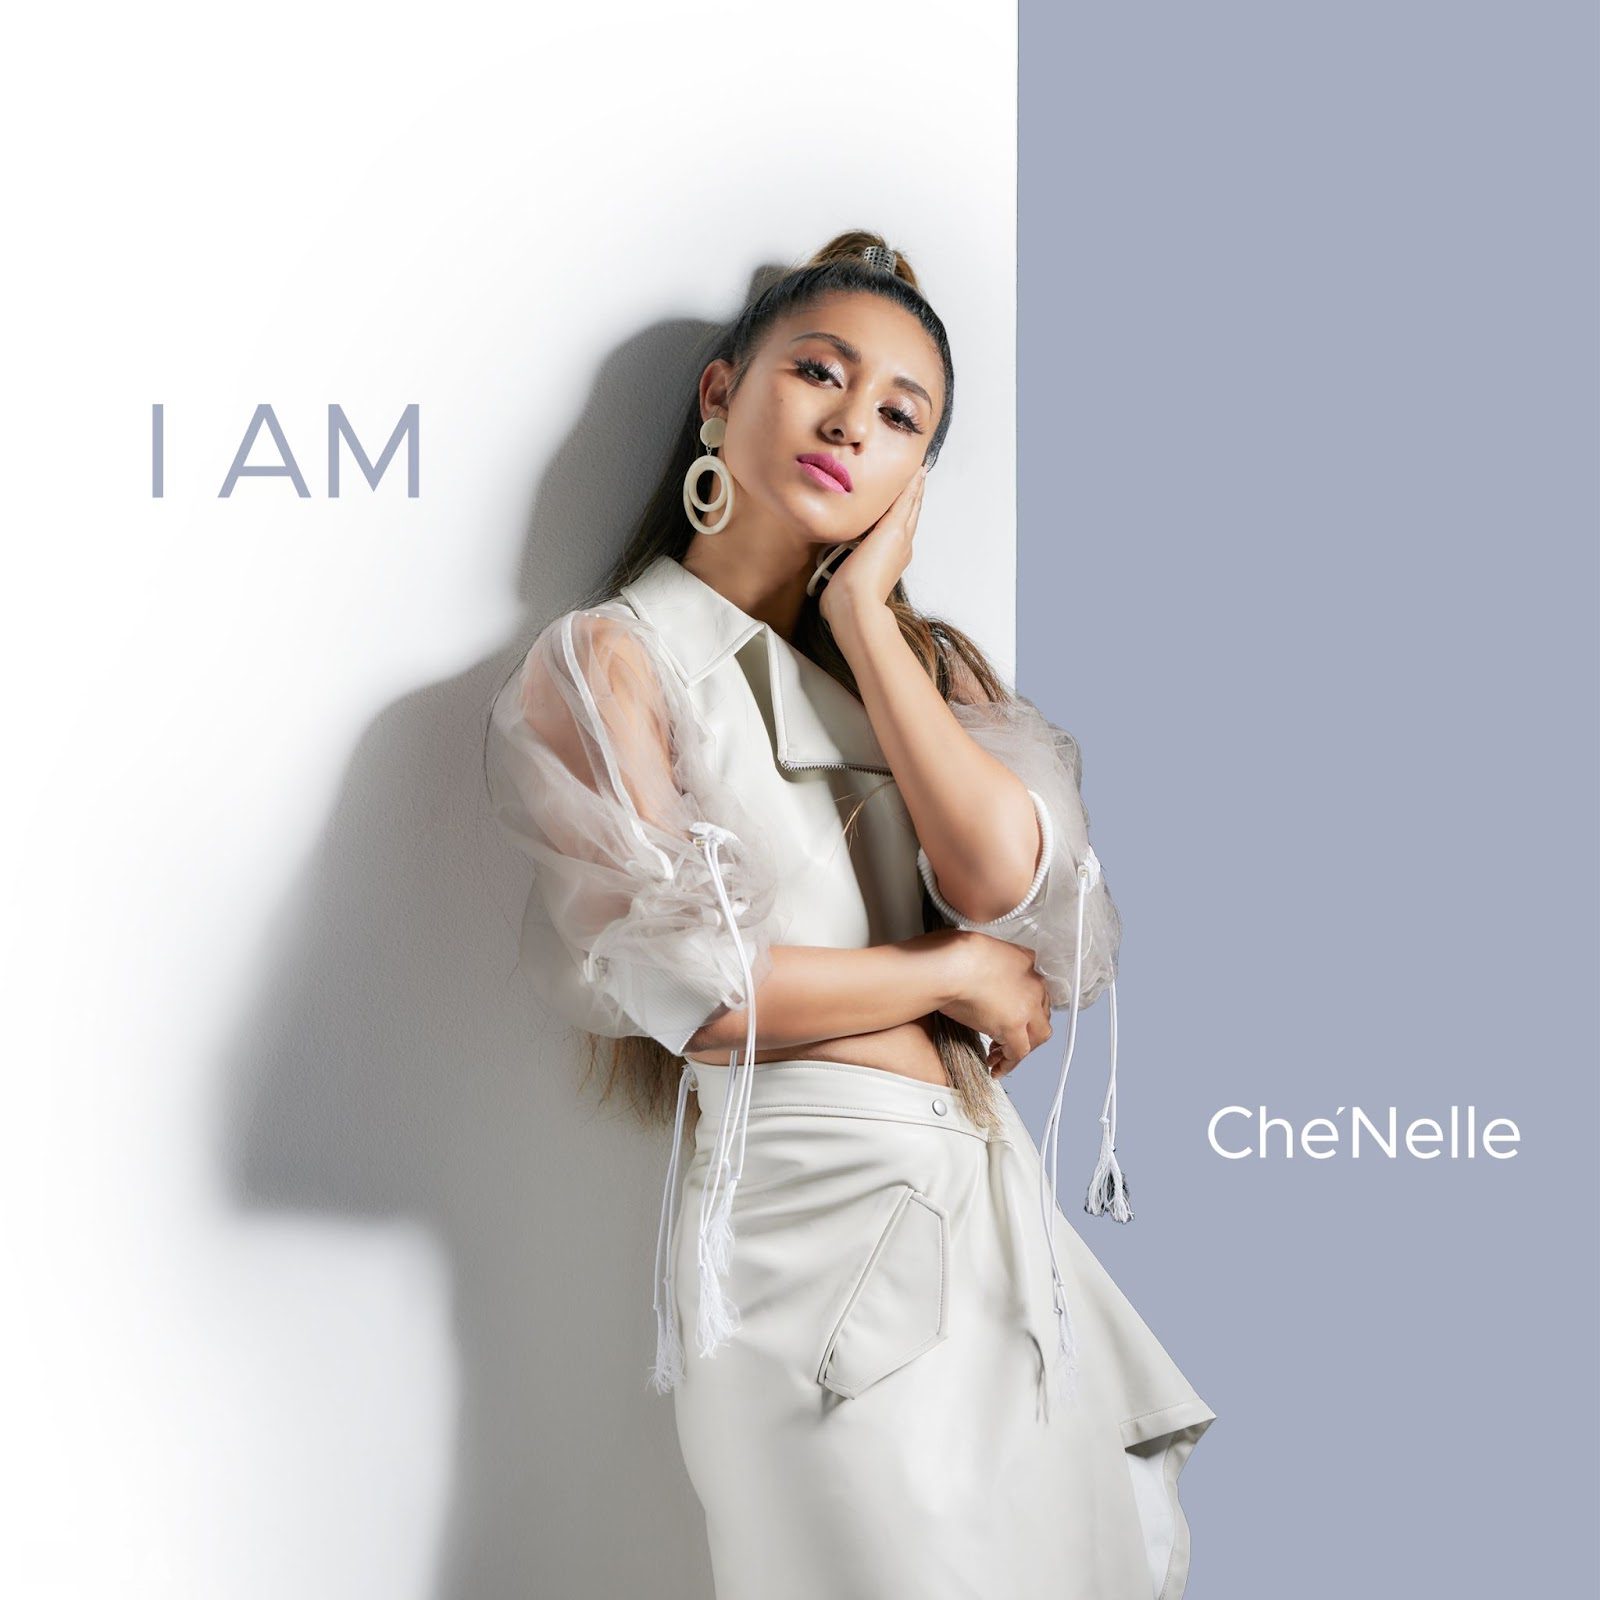 Che’Nelle（香奈兒）推出包含中文版本的新曲“I AM”。“即時有不順的日子，聽這首歌吧。”